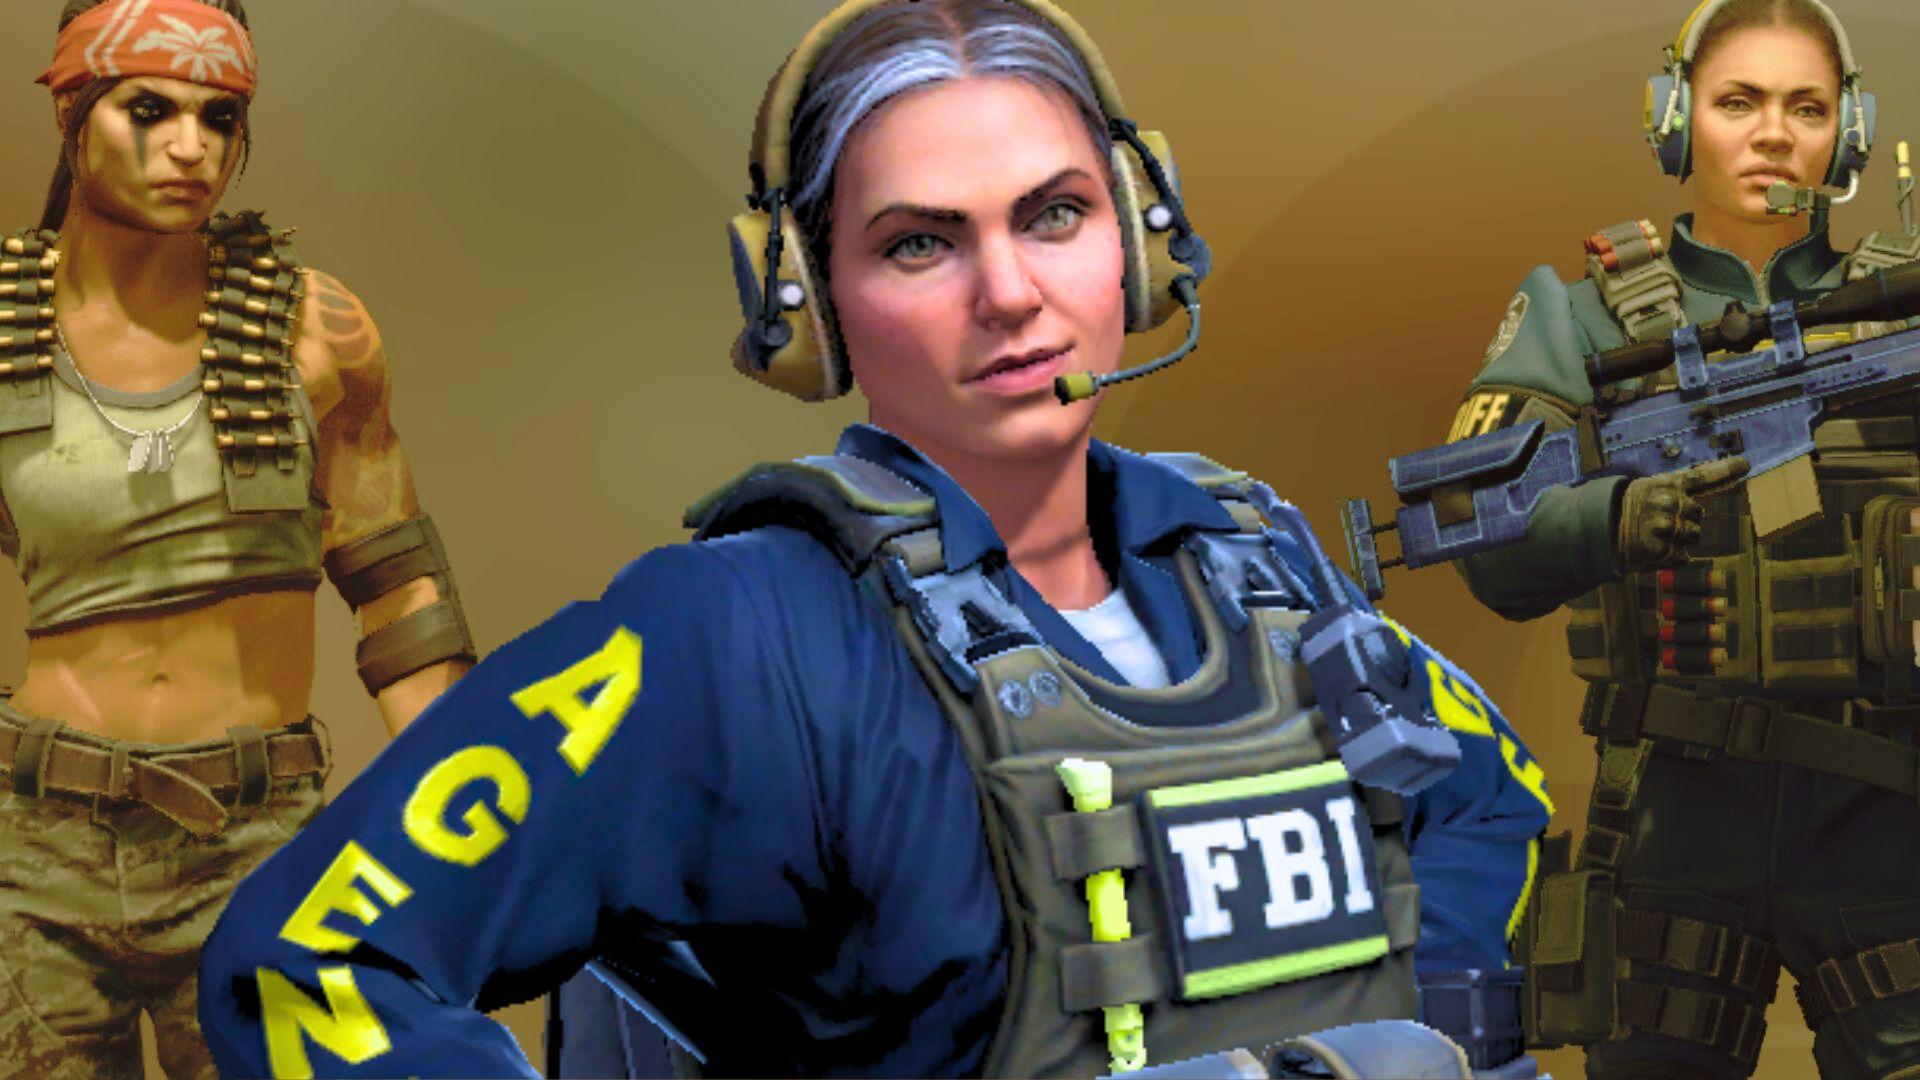 Counter-Strike 2 needs more women